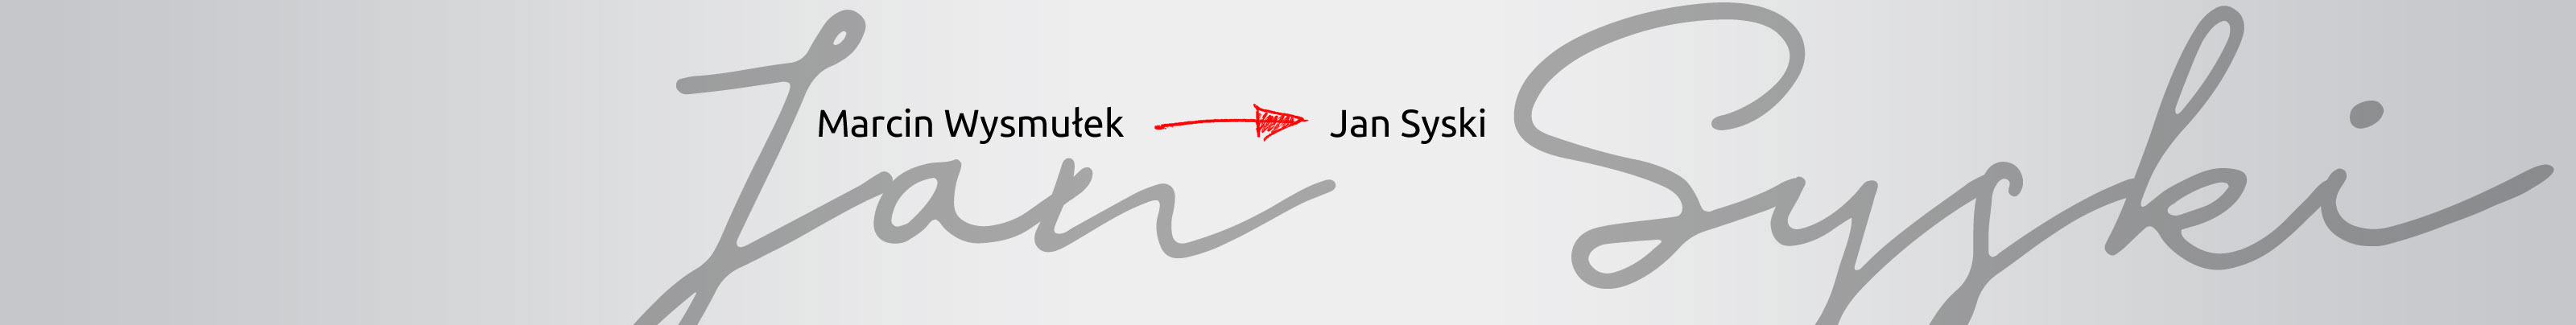 Jan Syski's profile banner